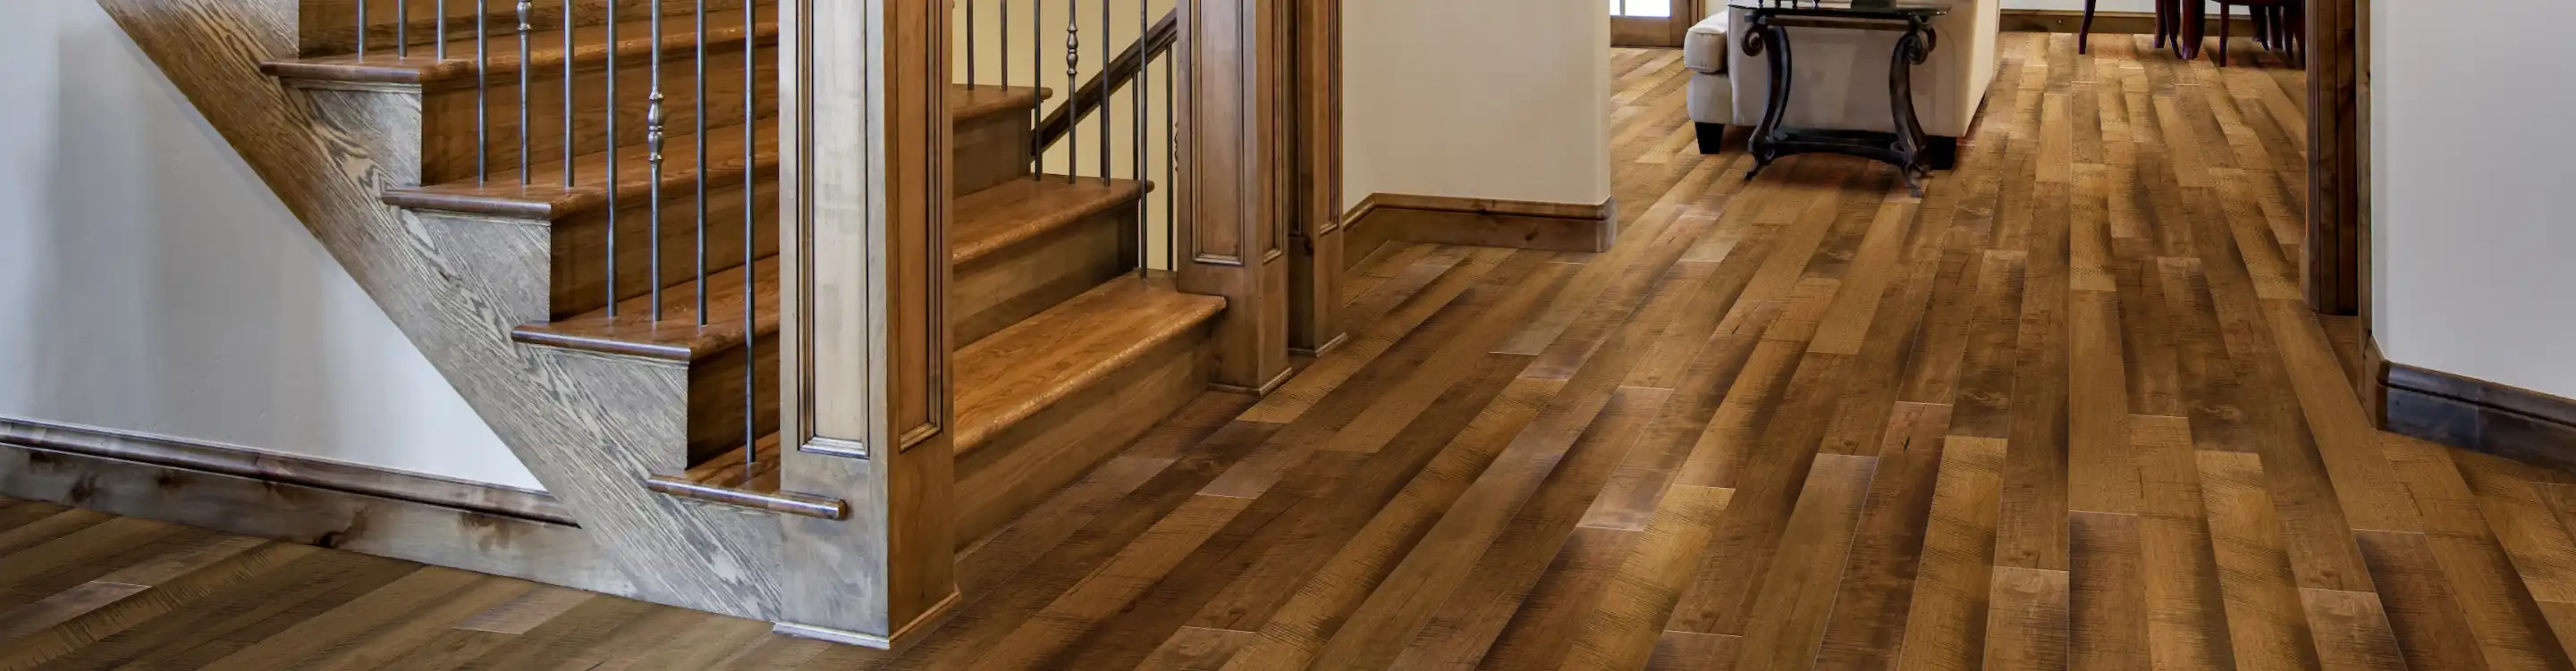 Hardwood floor in entryway with staircase, dark wood 